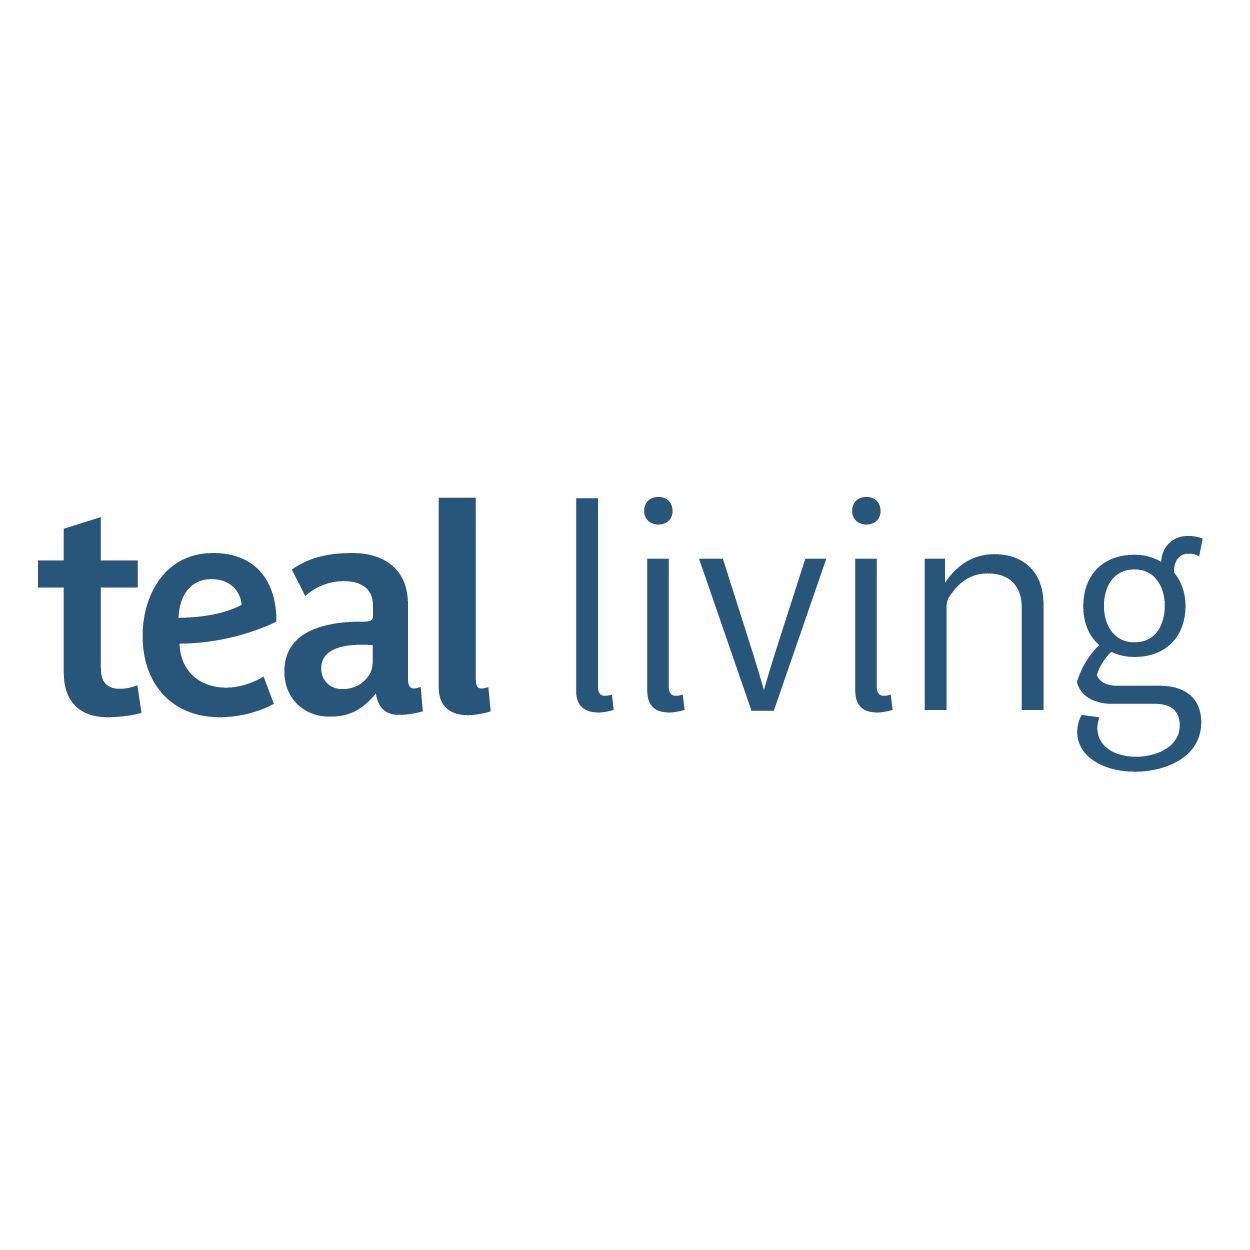 Teal Living